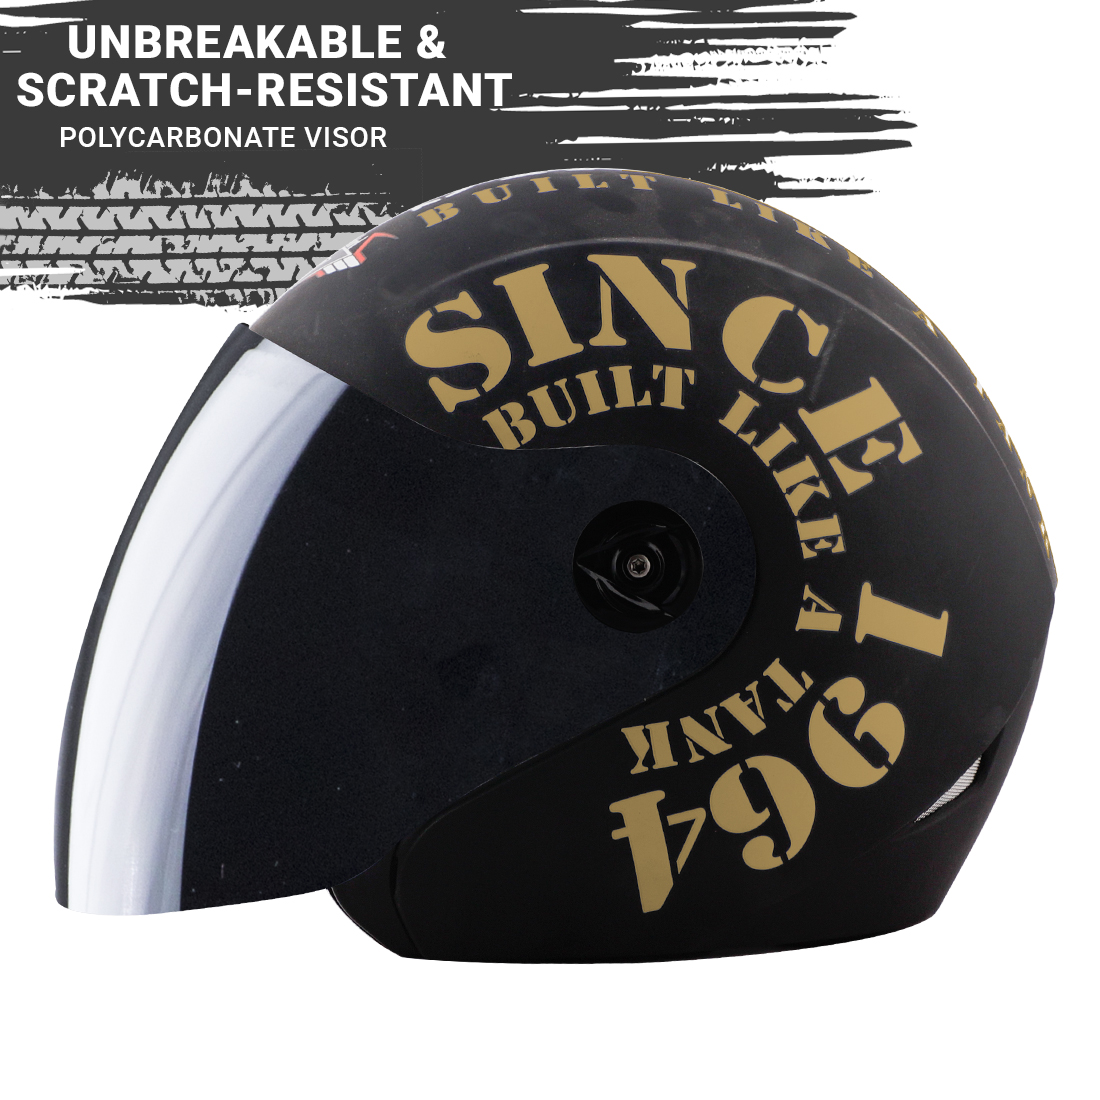 Steelbird SB-43 Yoyo Tank Open Face Graphic Helmet (Matt Black Gold With Smoke Visor)